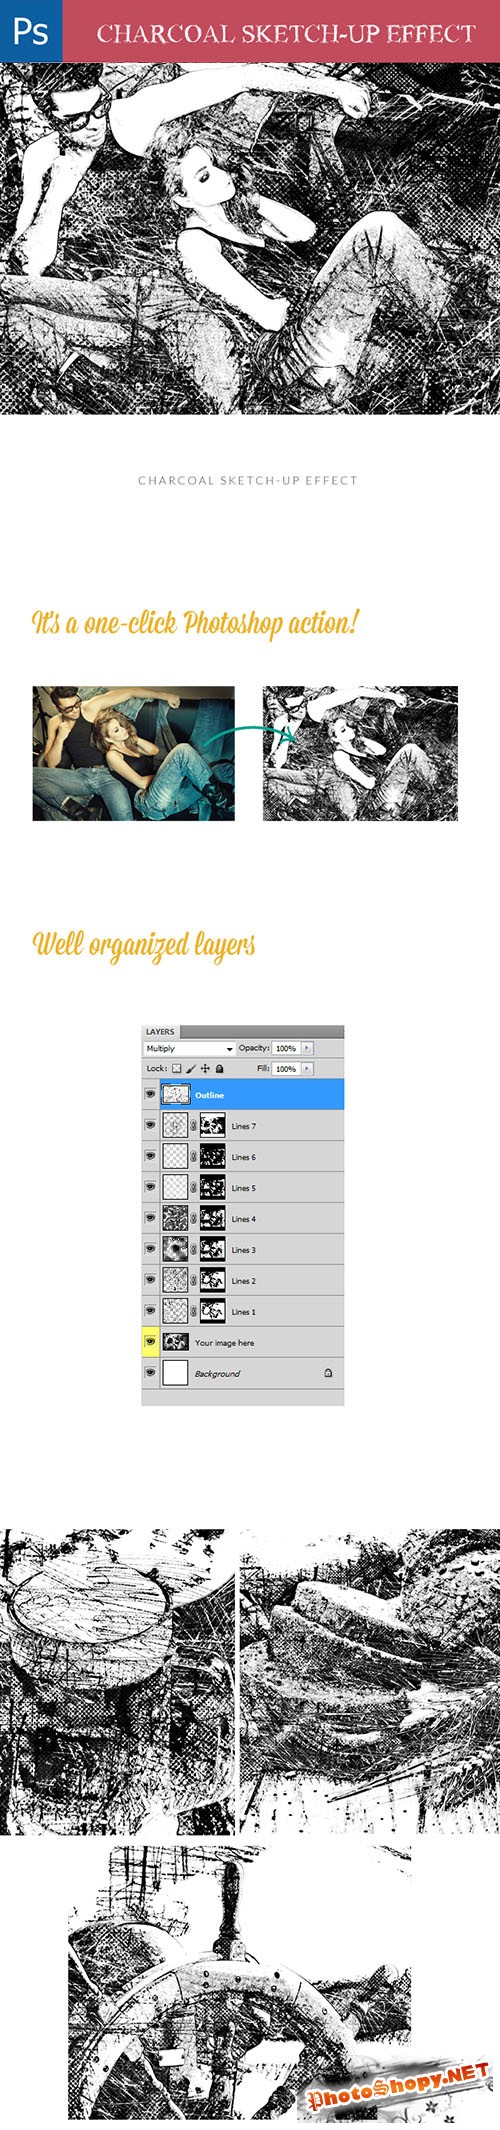 Designtnt - Charcoal Scratch PS Photo Effects